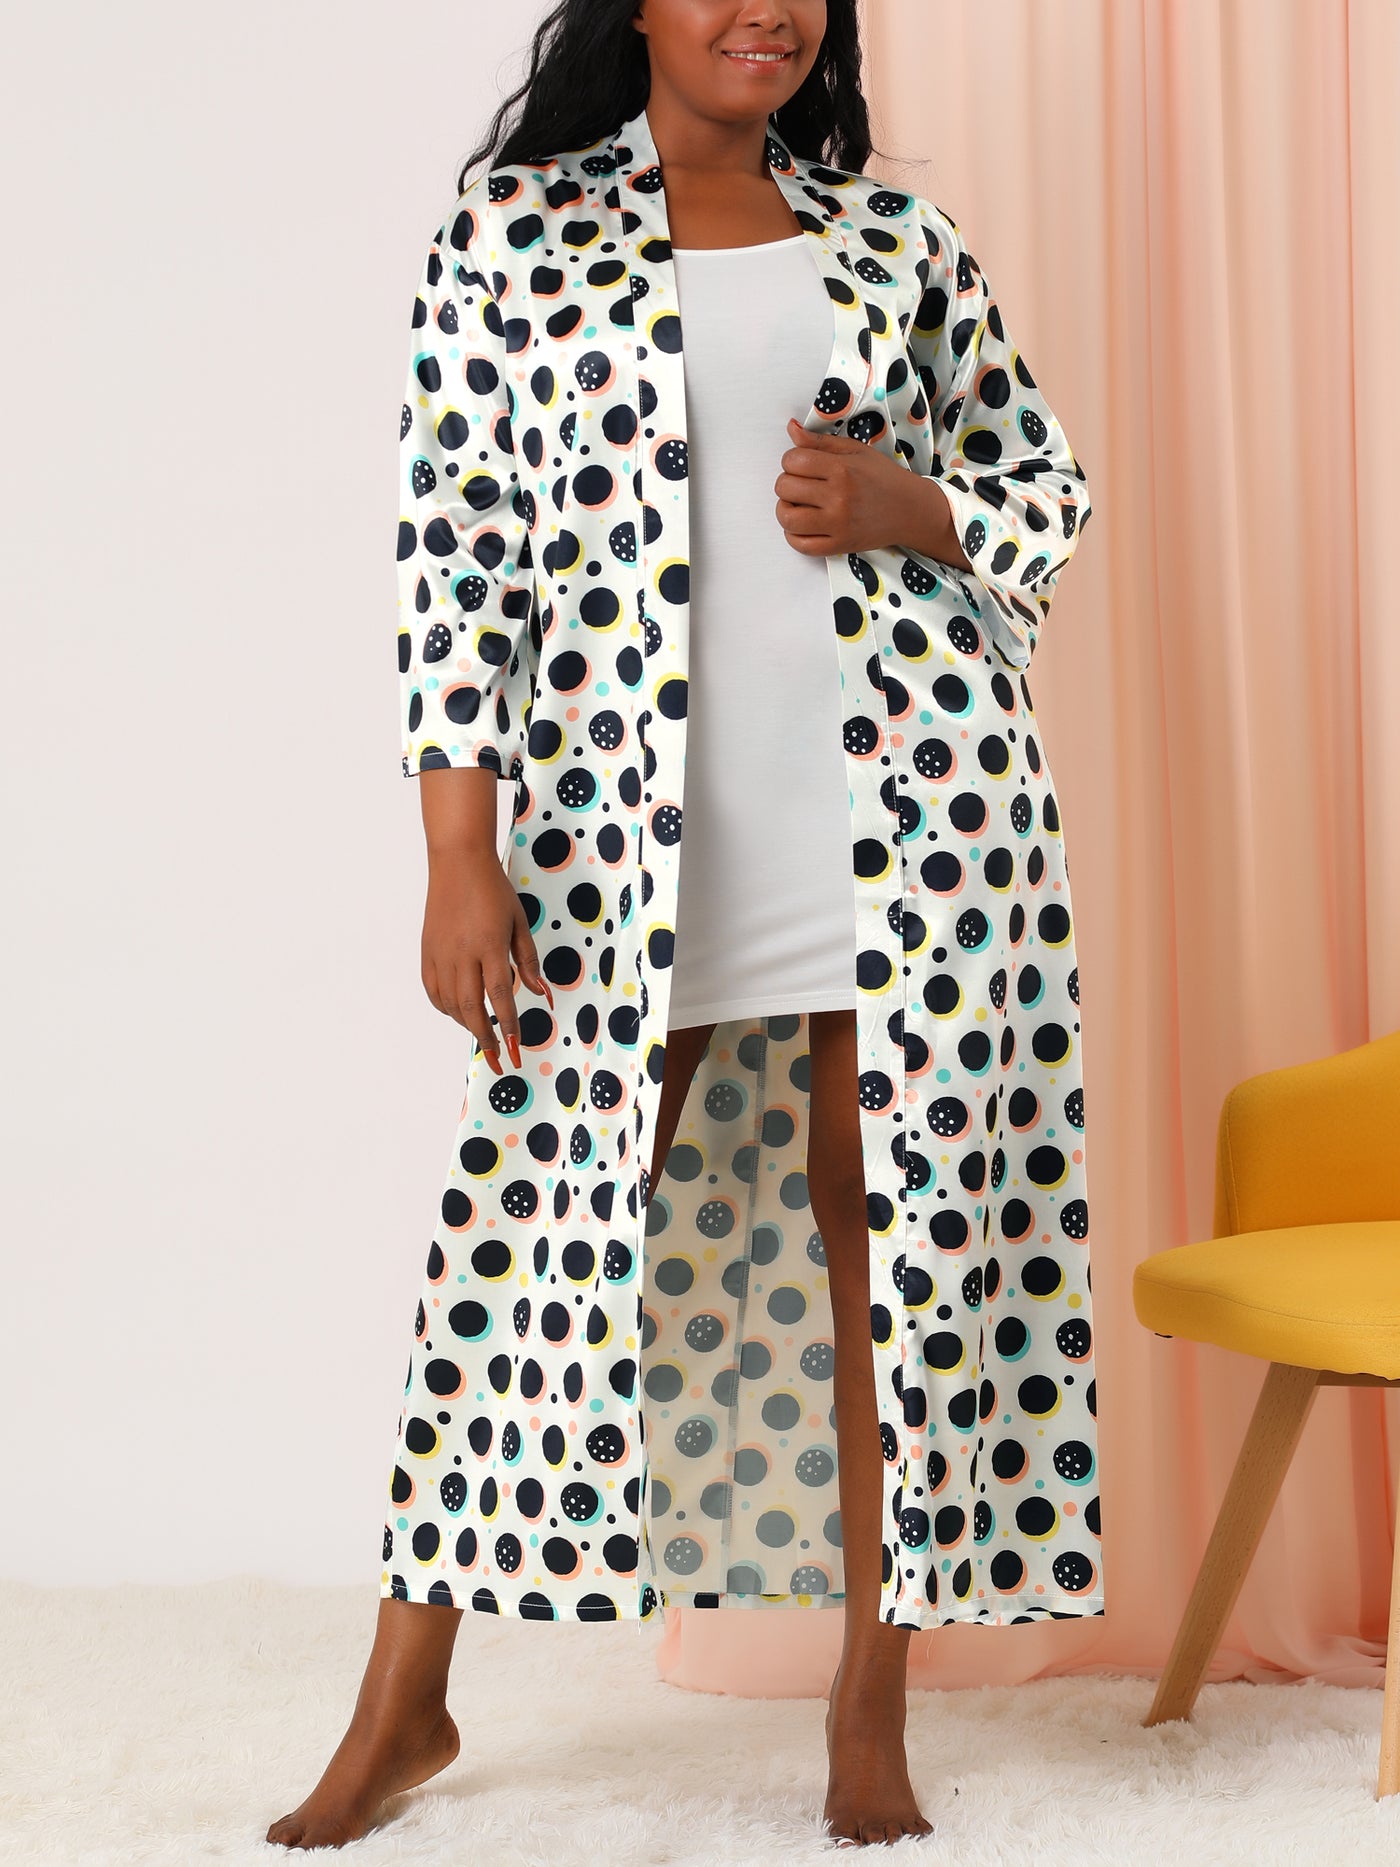 Bublédon Women's Plus Size Robes Sleepwear Polka Dots Self Tie Waist Long Bathrobe Nightgown